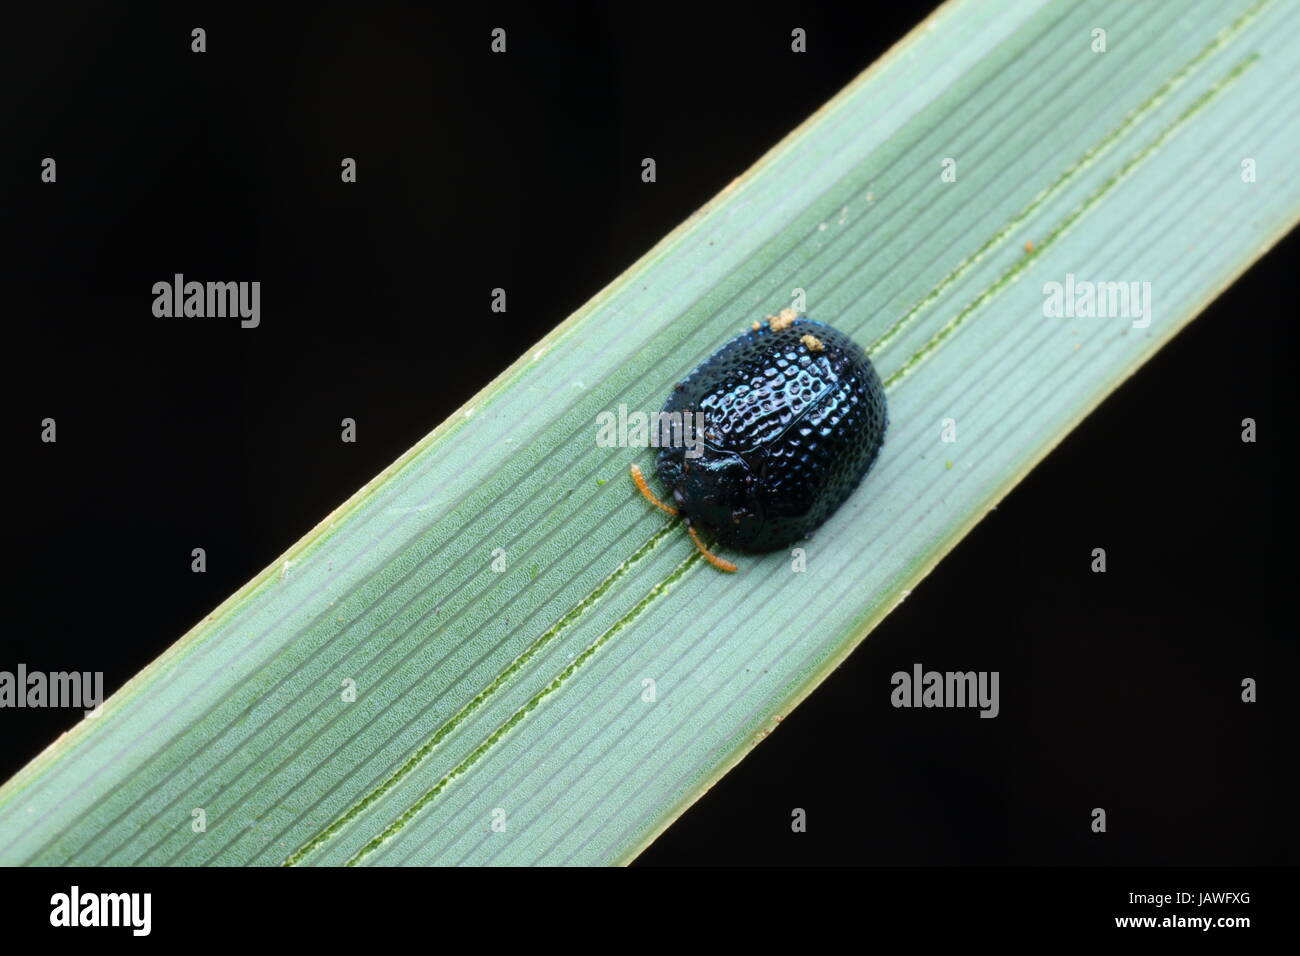 A palmetto tortoise beetle, Hemisphaerota cyanea, on a leaf. Stock Photo